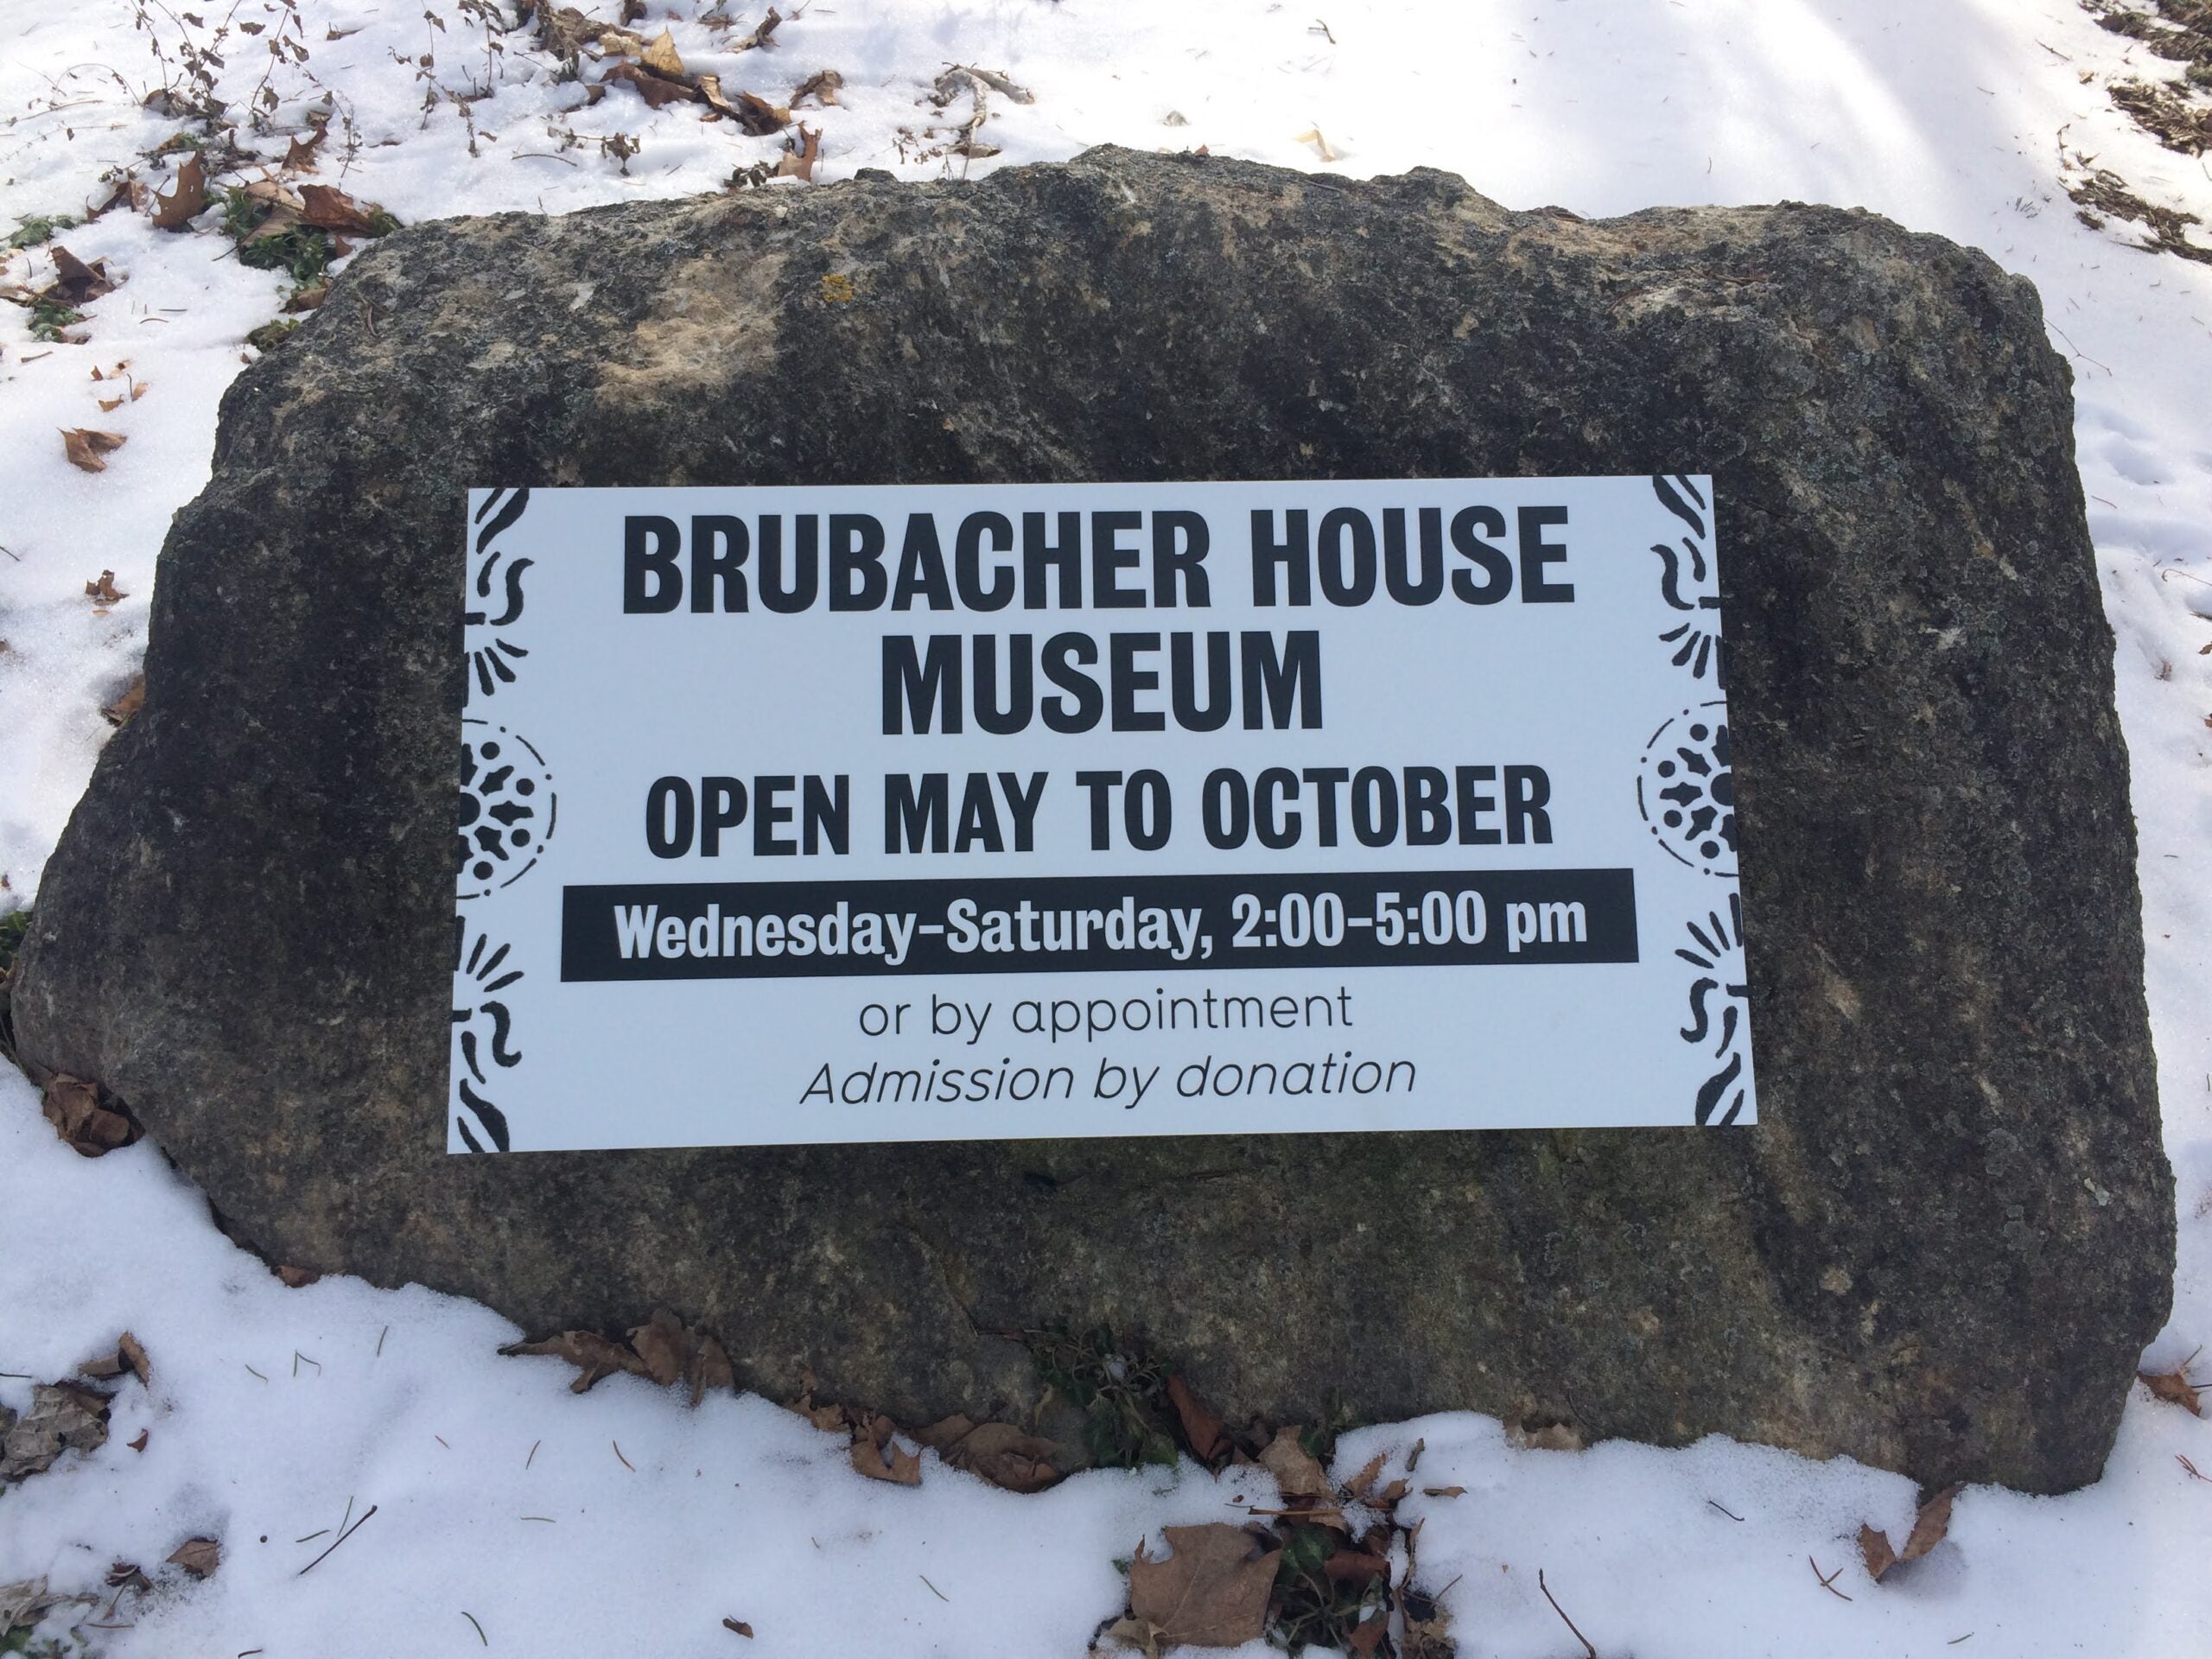 Brubacher House Museum sign